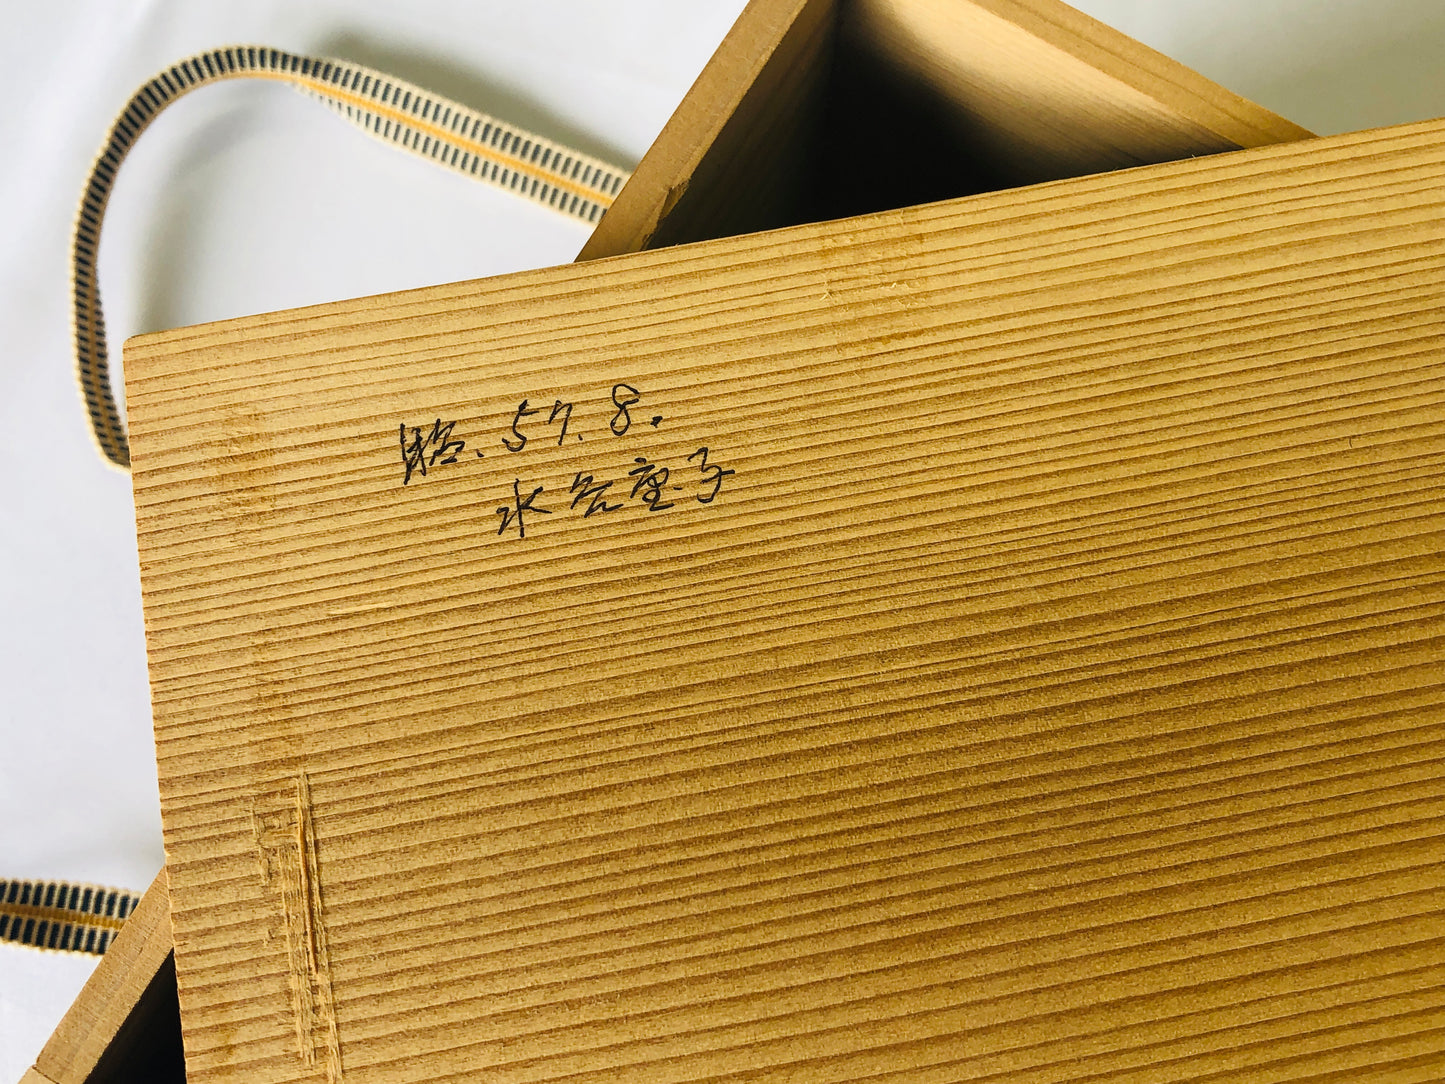 Y4600 KENSUI Copper Water Pot signed box Japanese Tea Ceremony antique Japan